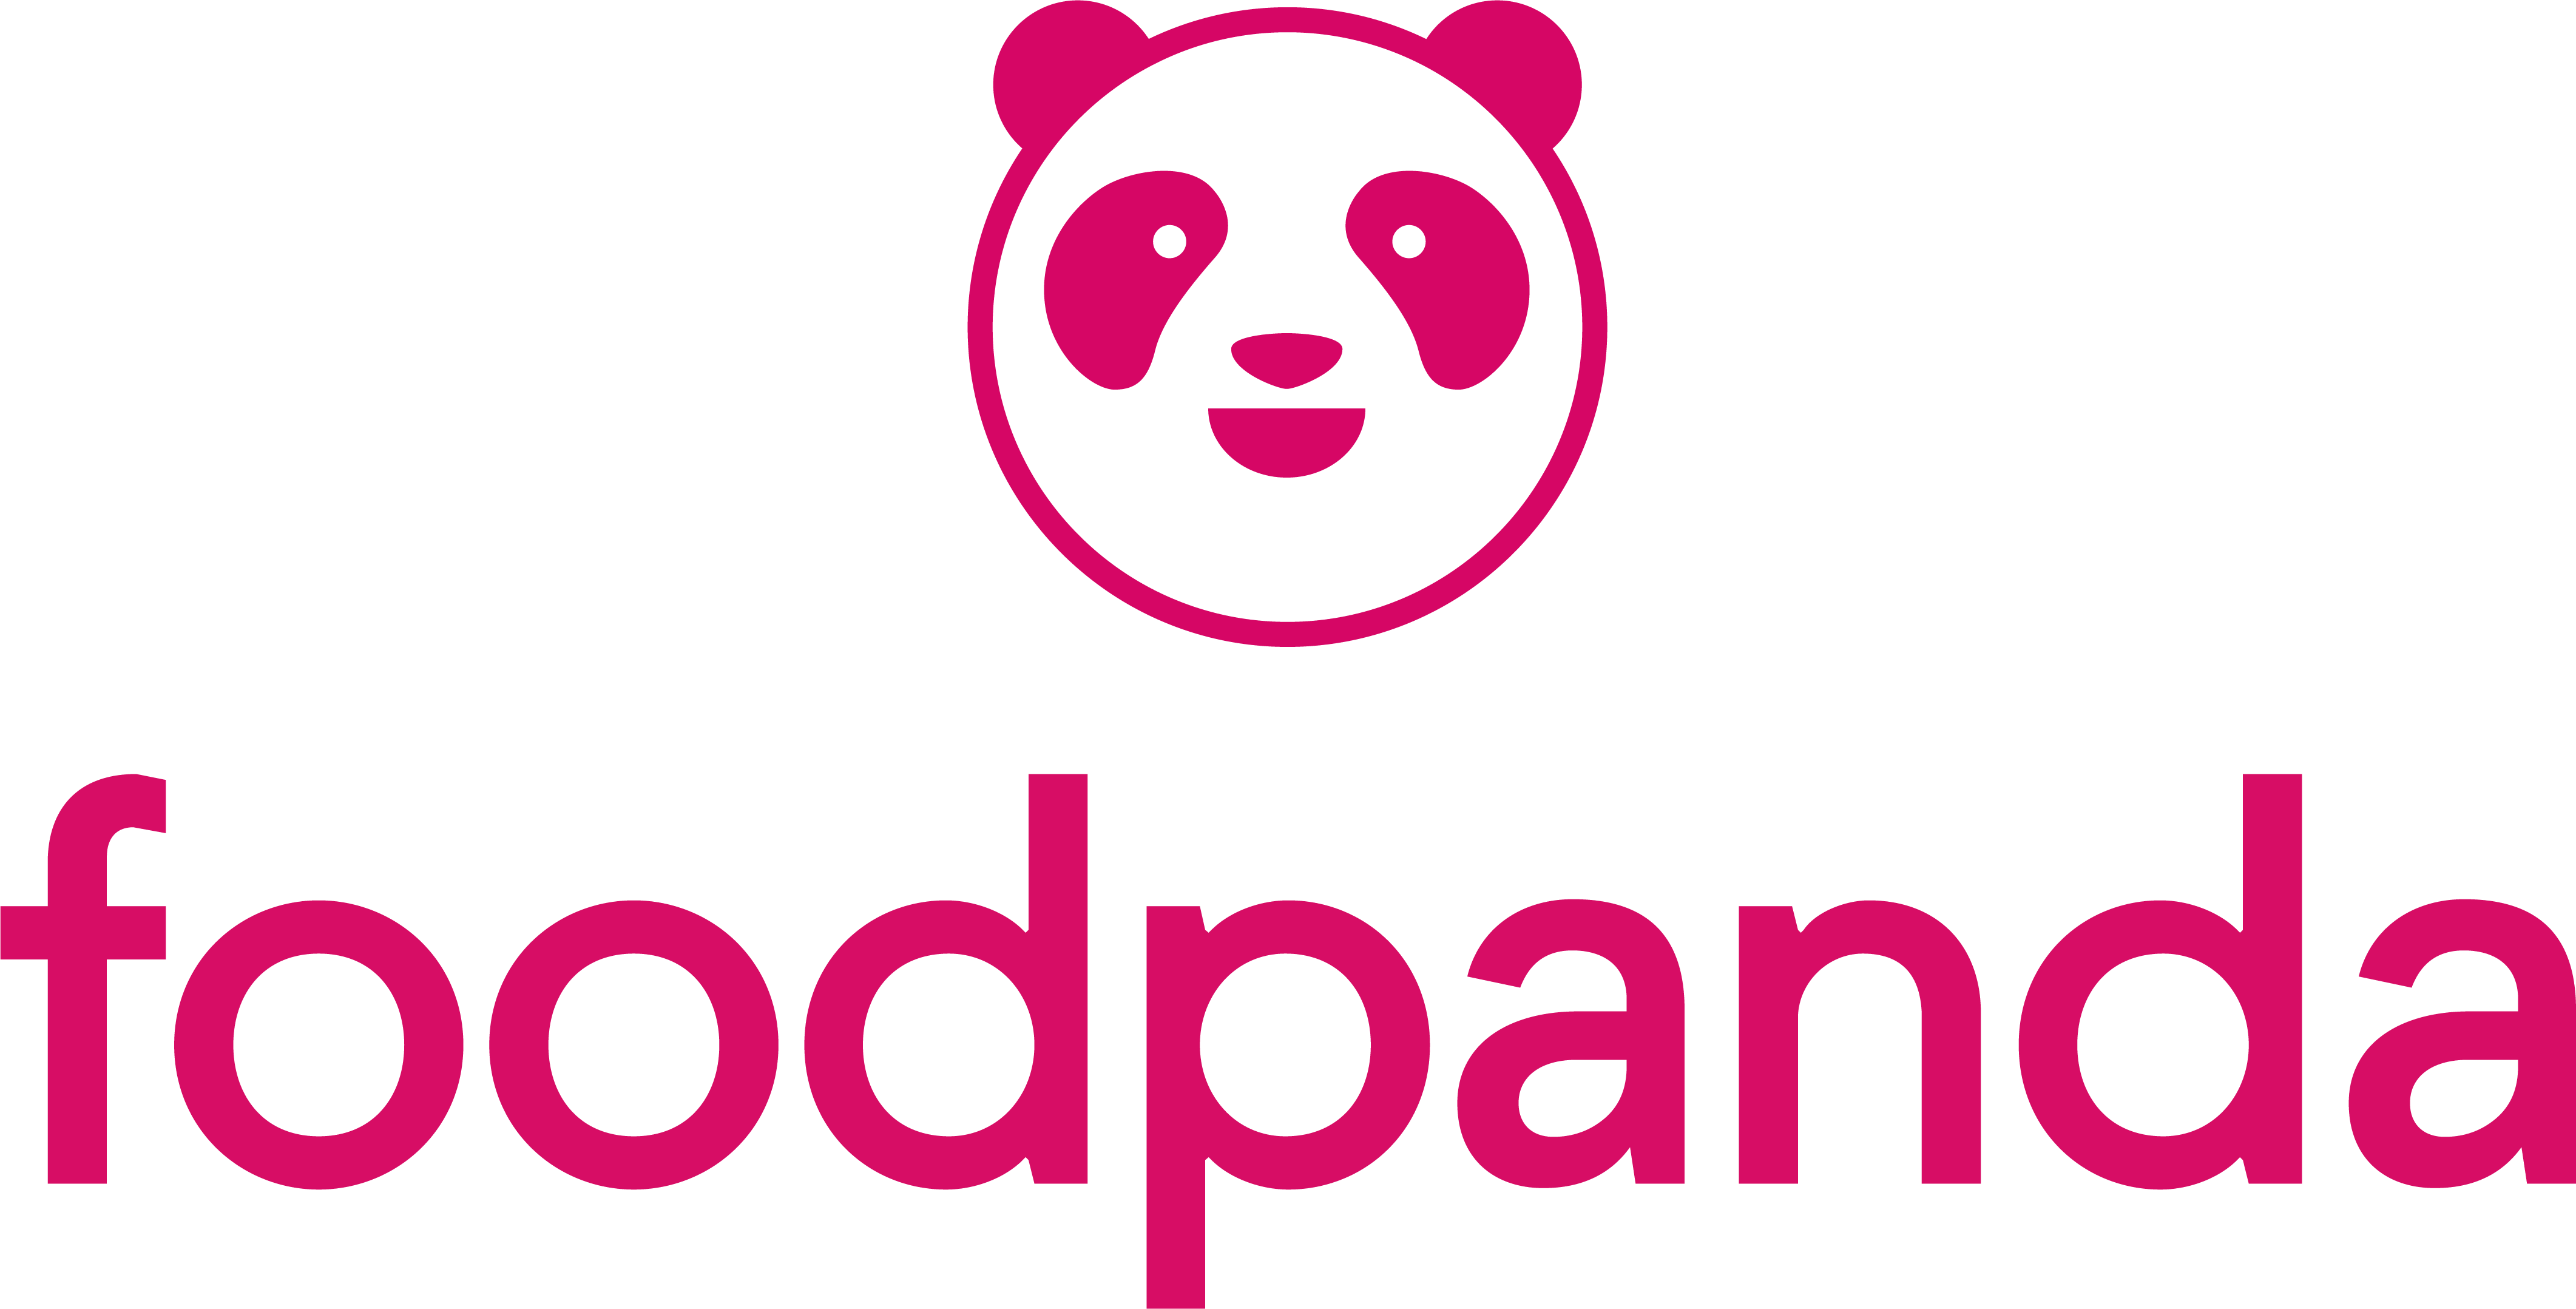 Foodpanda_logo_since_2017.png